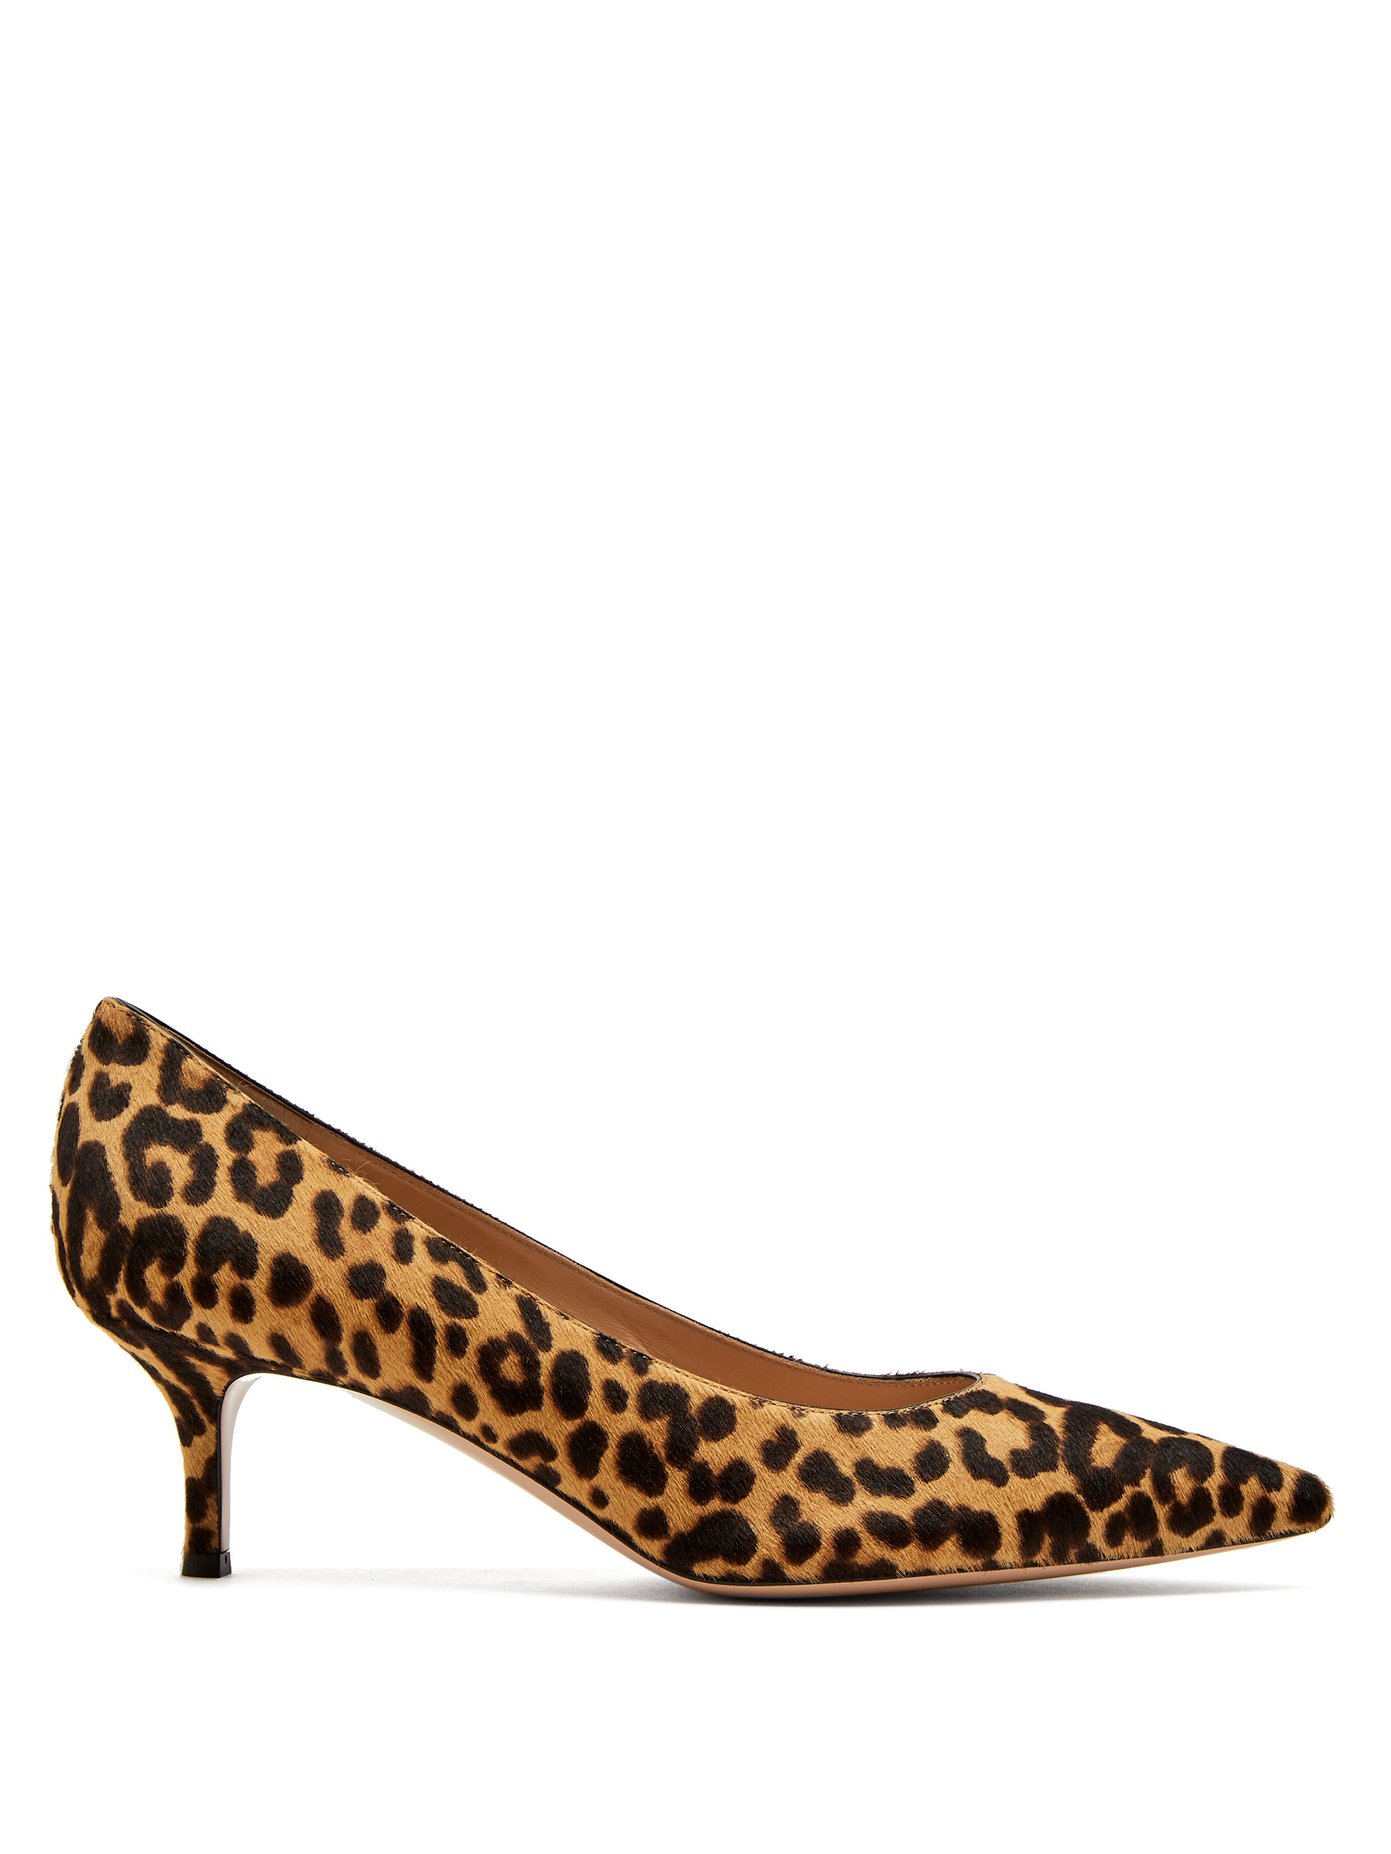 leopard print high heels uk